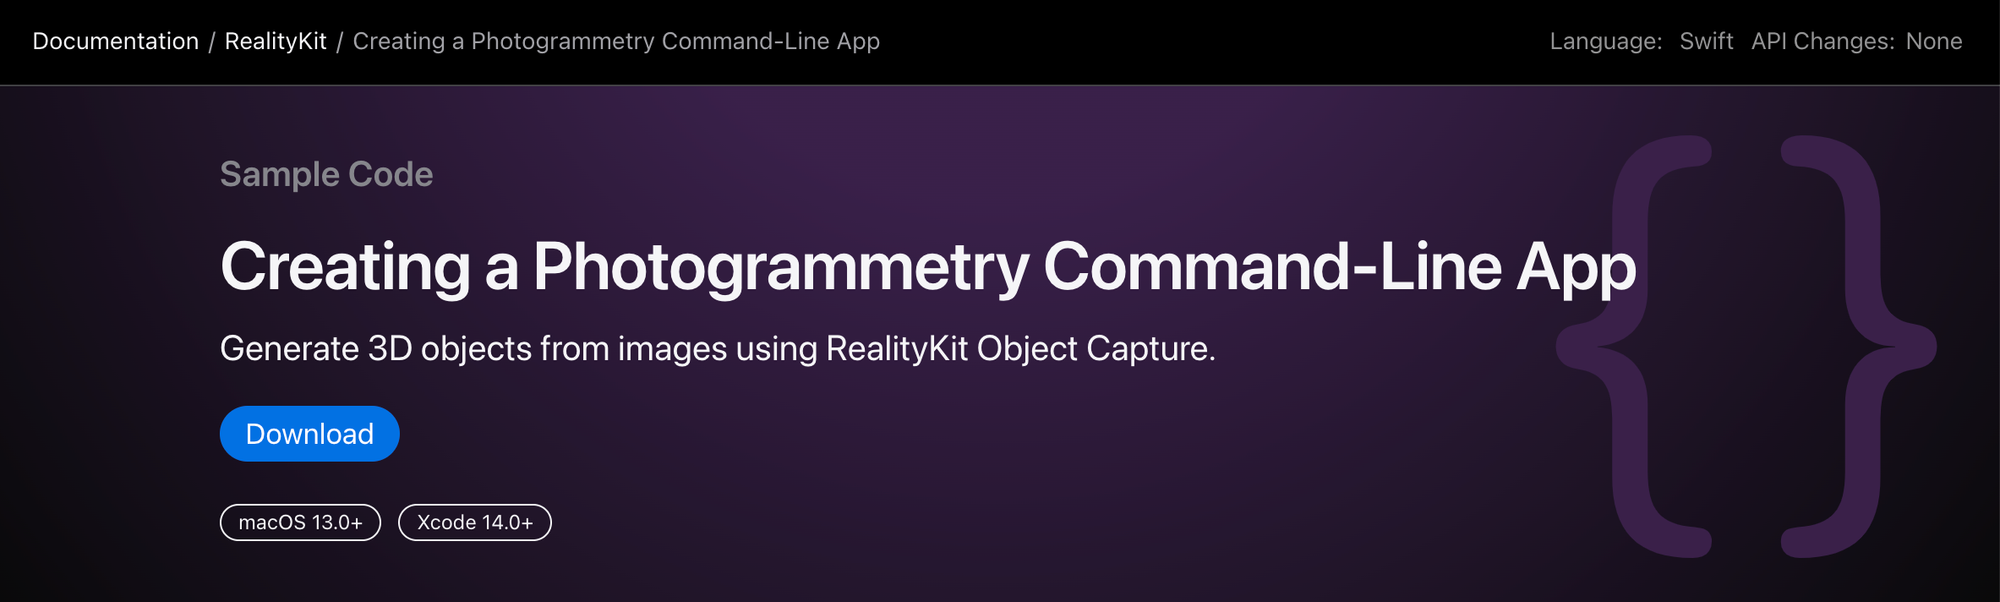 https://developer.apple.com/documentation/realitykit/creating_a_photogrammetry_command-line_app